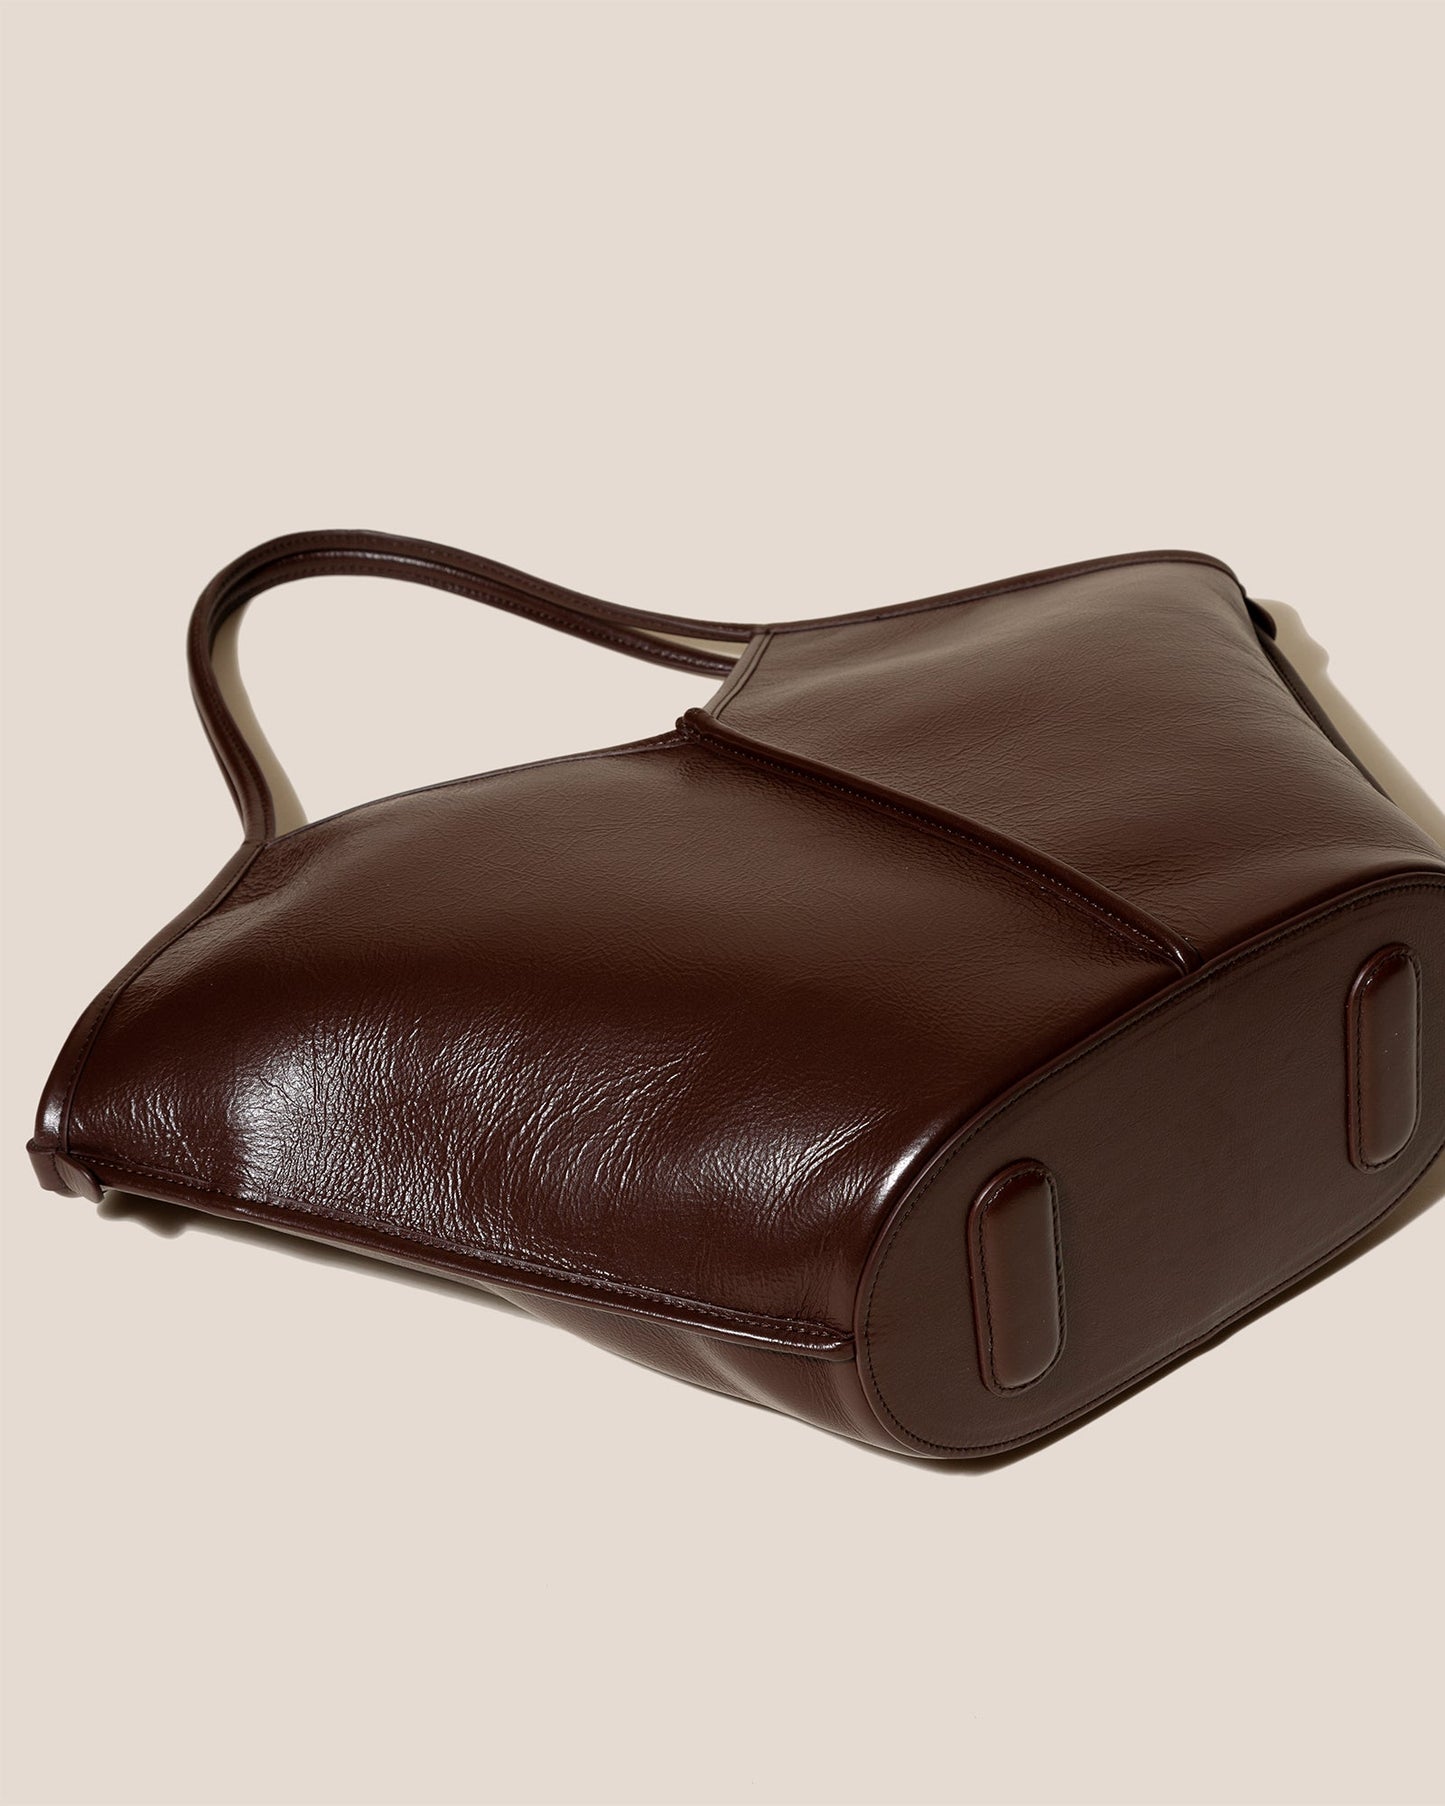 CALELLA DISTRESSED - Leather Tote Bag